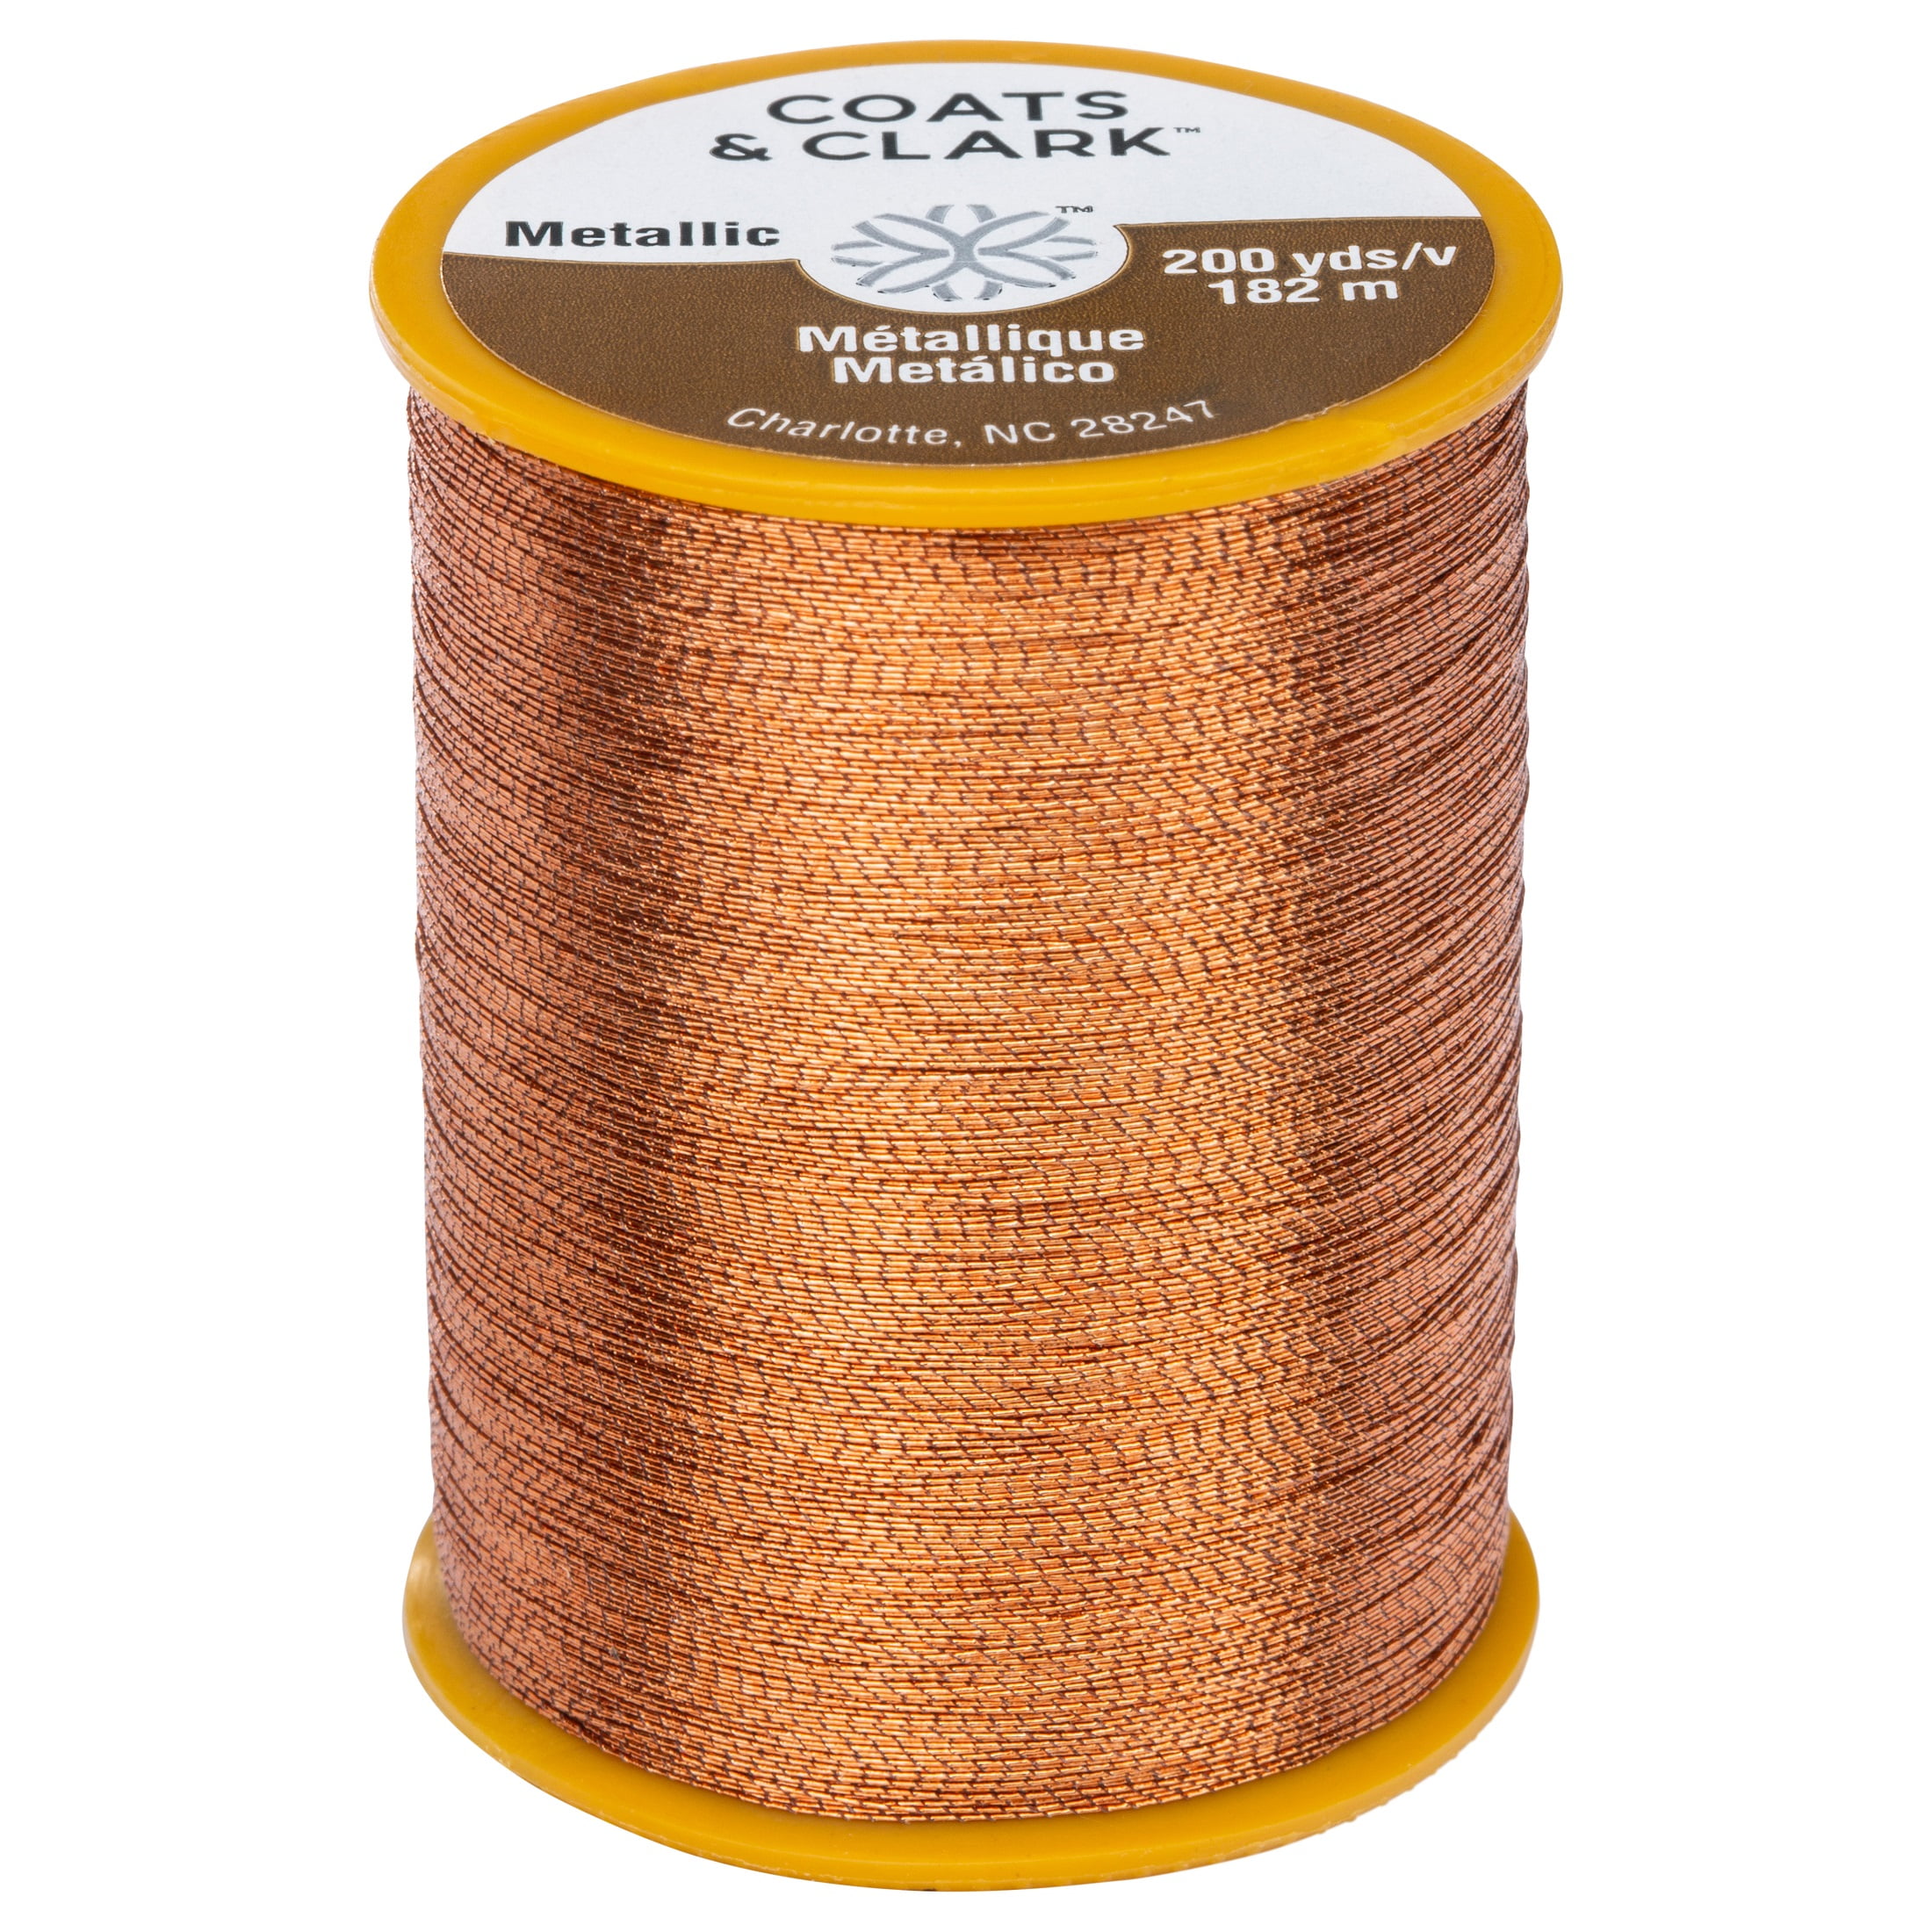 Coats & Clark Metallic Copper Embroidery Thread, 200 Yards